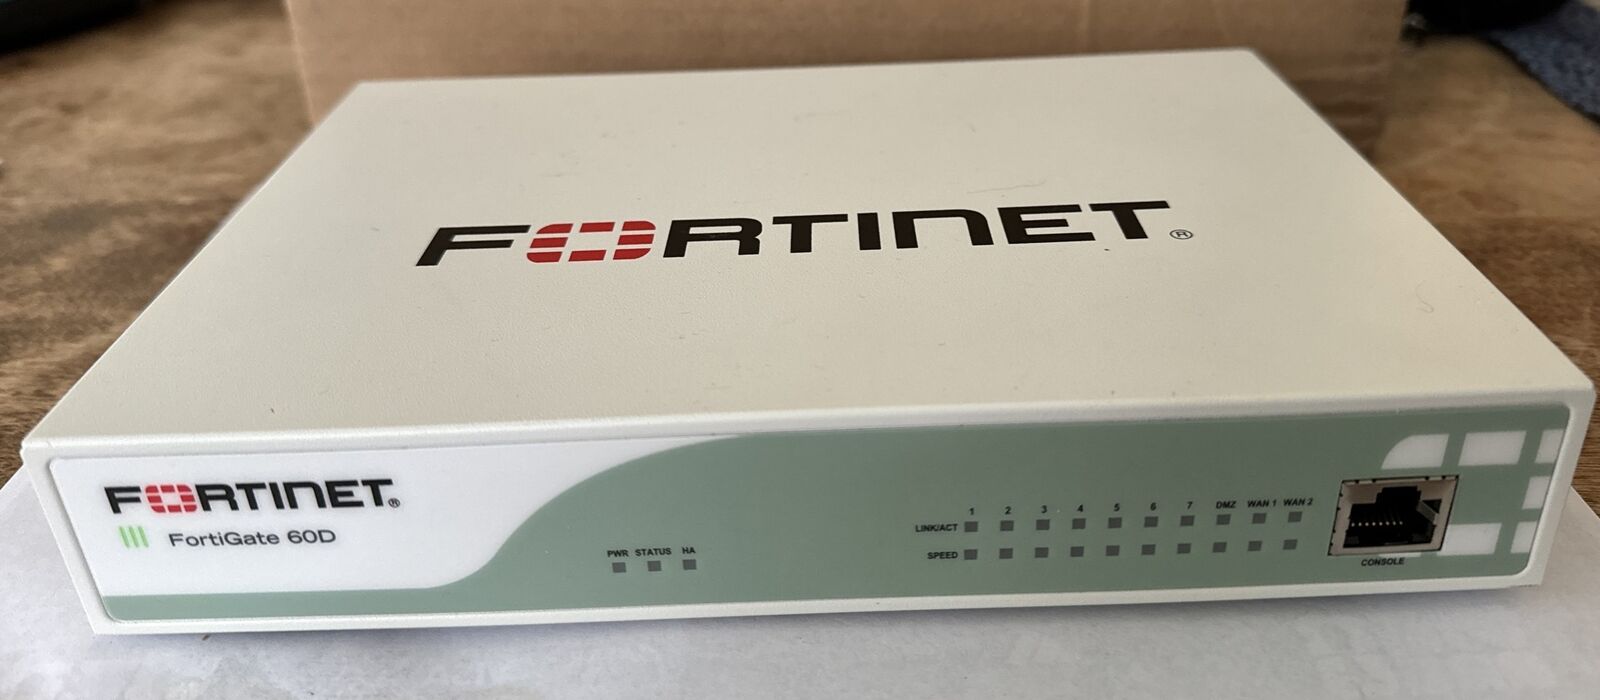 Fortinet FortiGate 60D Firewall Network Security Appliance FG-60D w/ A/C ADAPTER